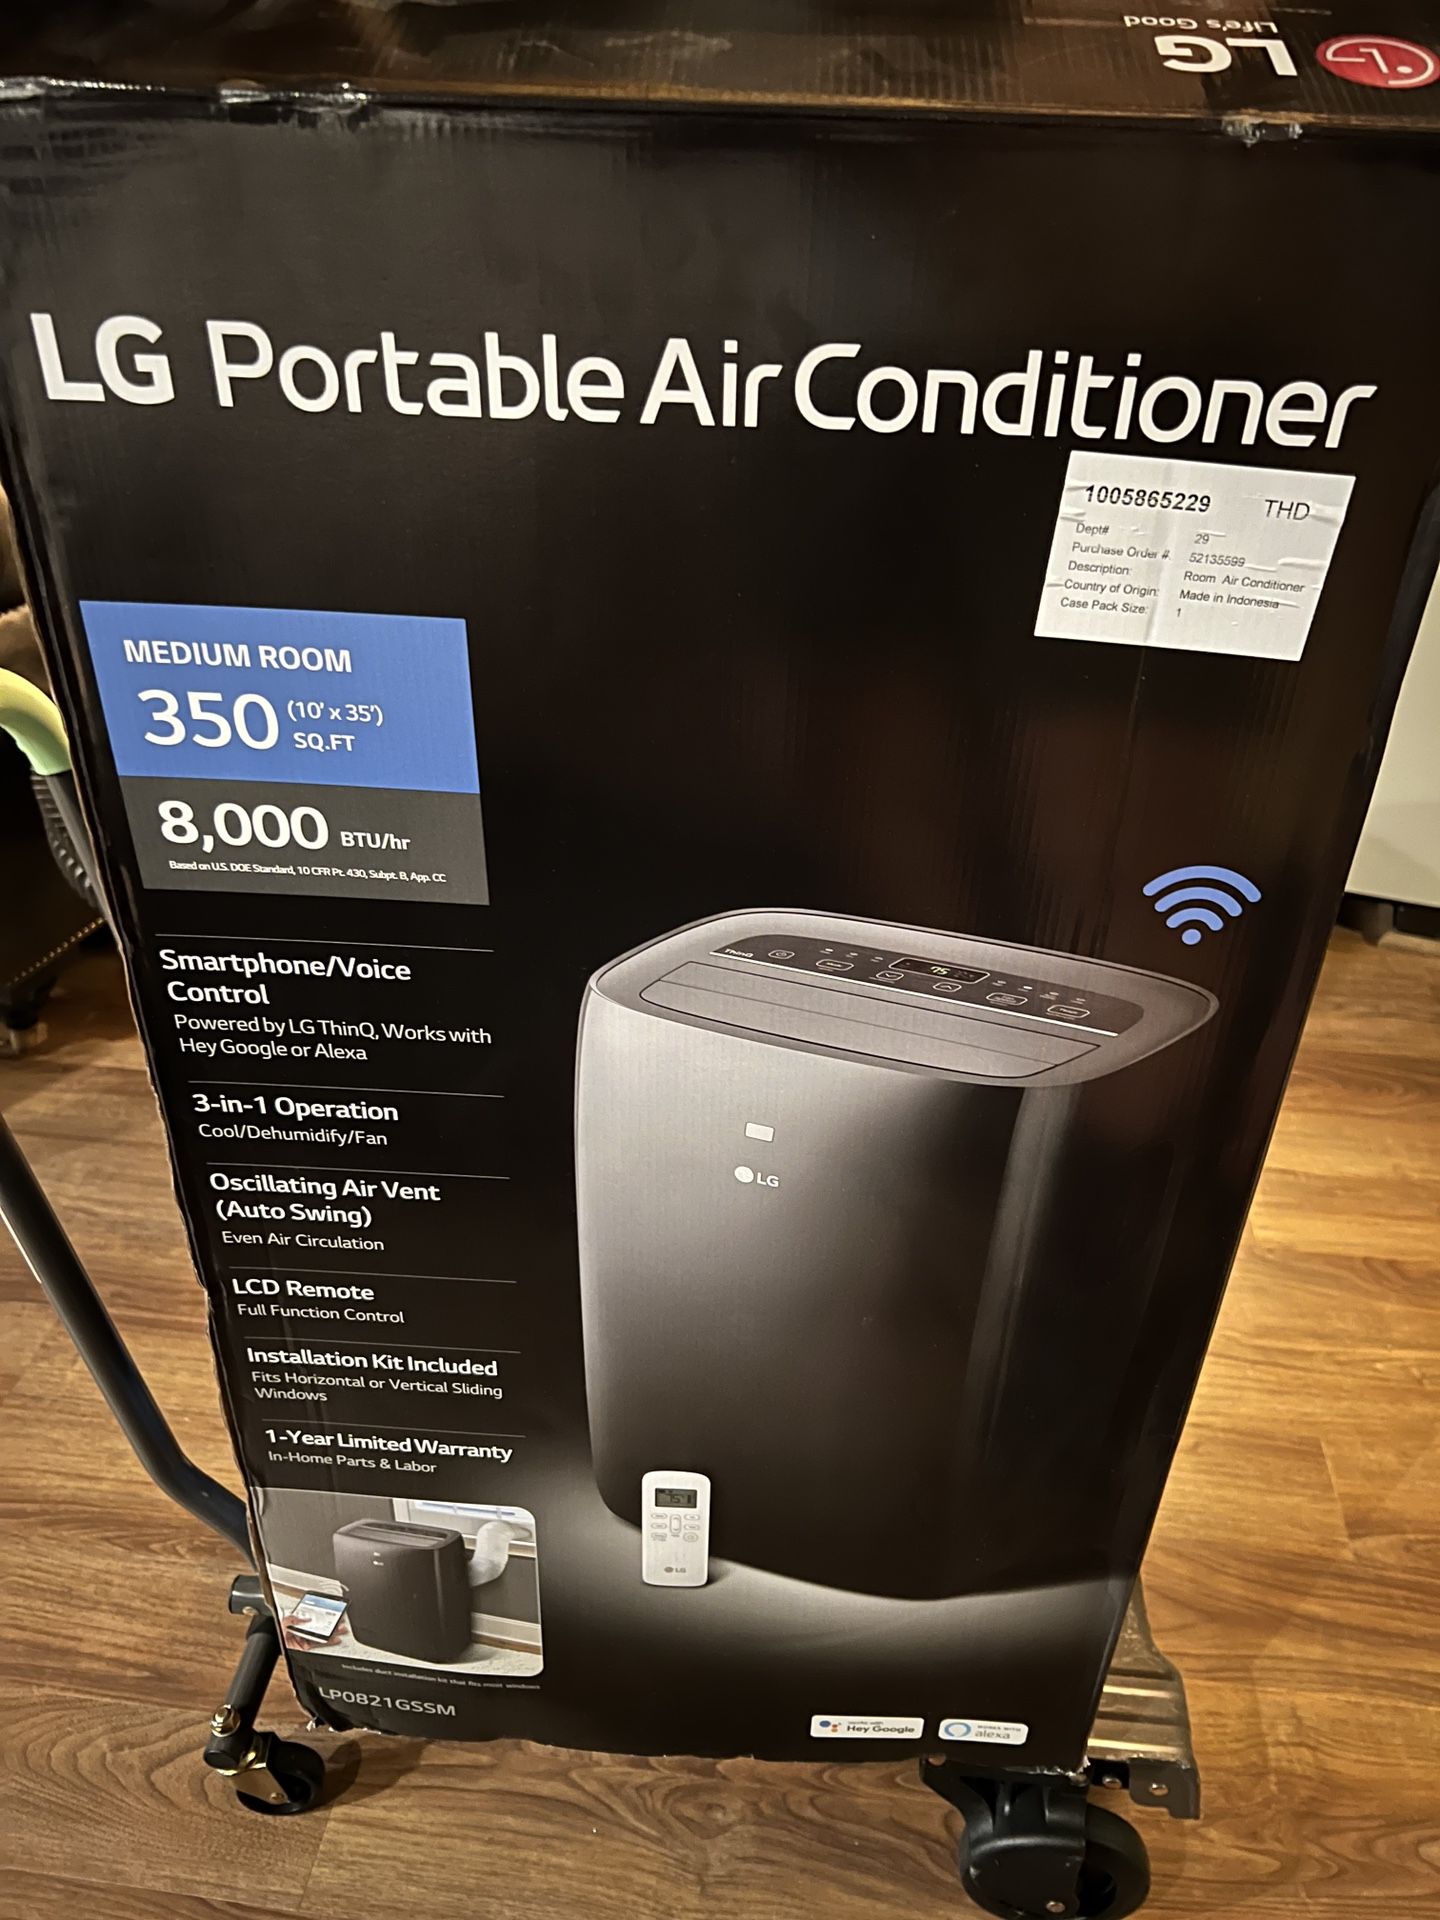 AC Portable Air Conditioner LG